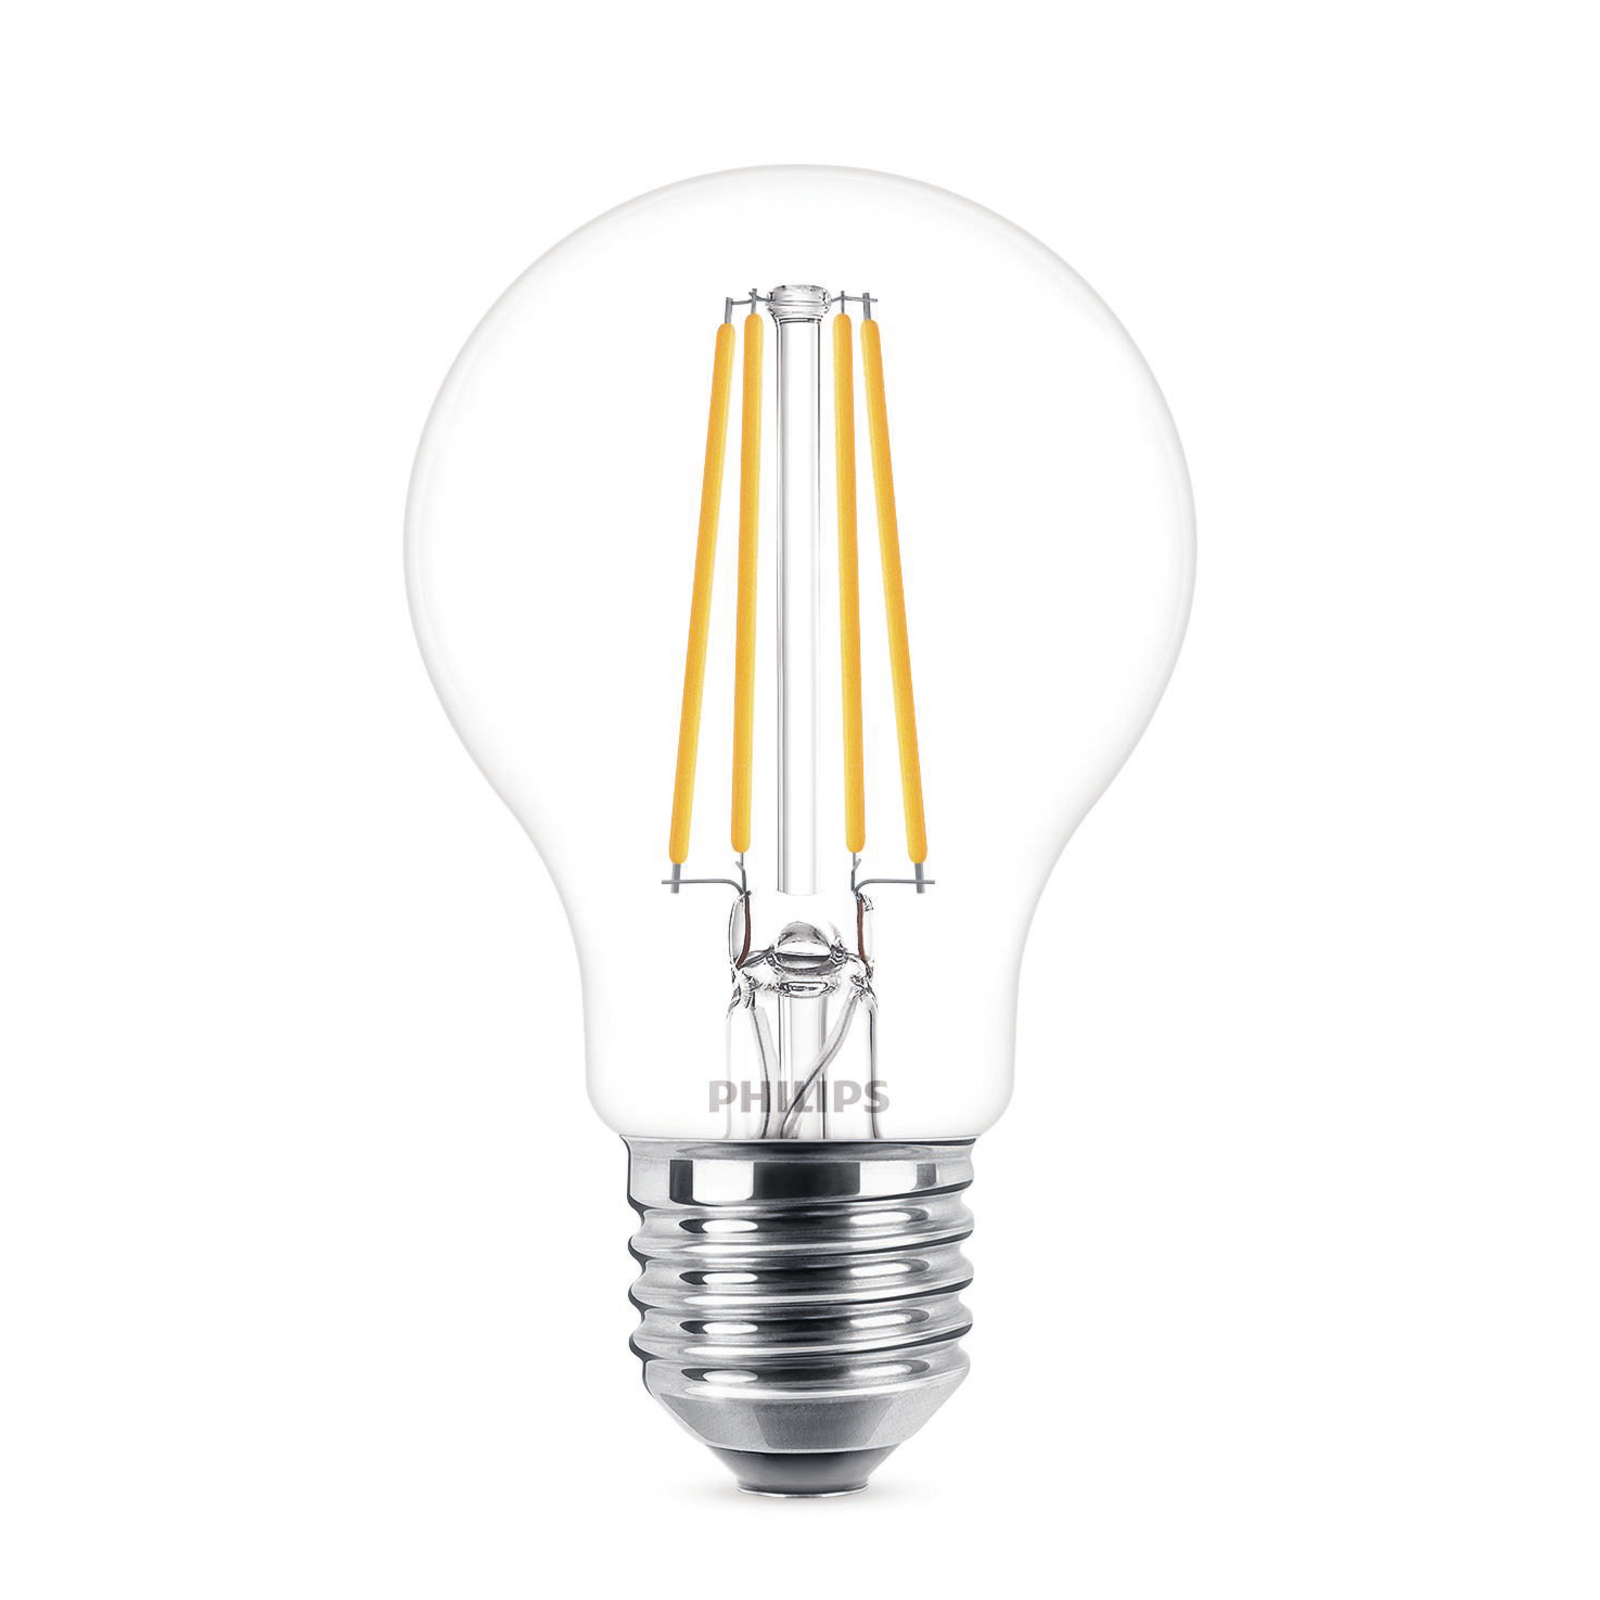 Philips LED bulb E27 7W 850lm 4,000K clear 3-pack